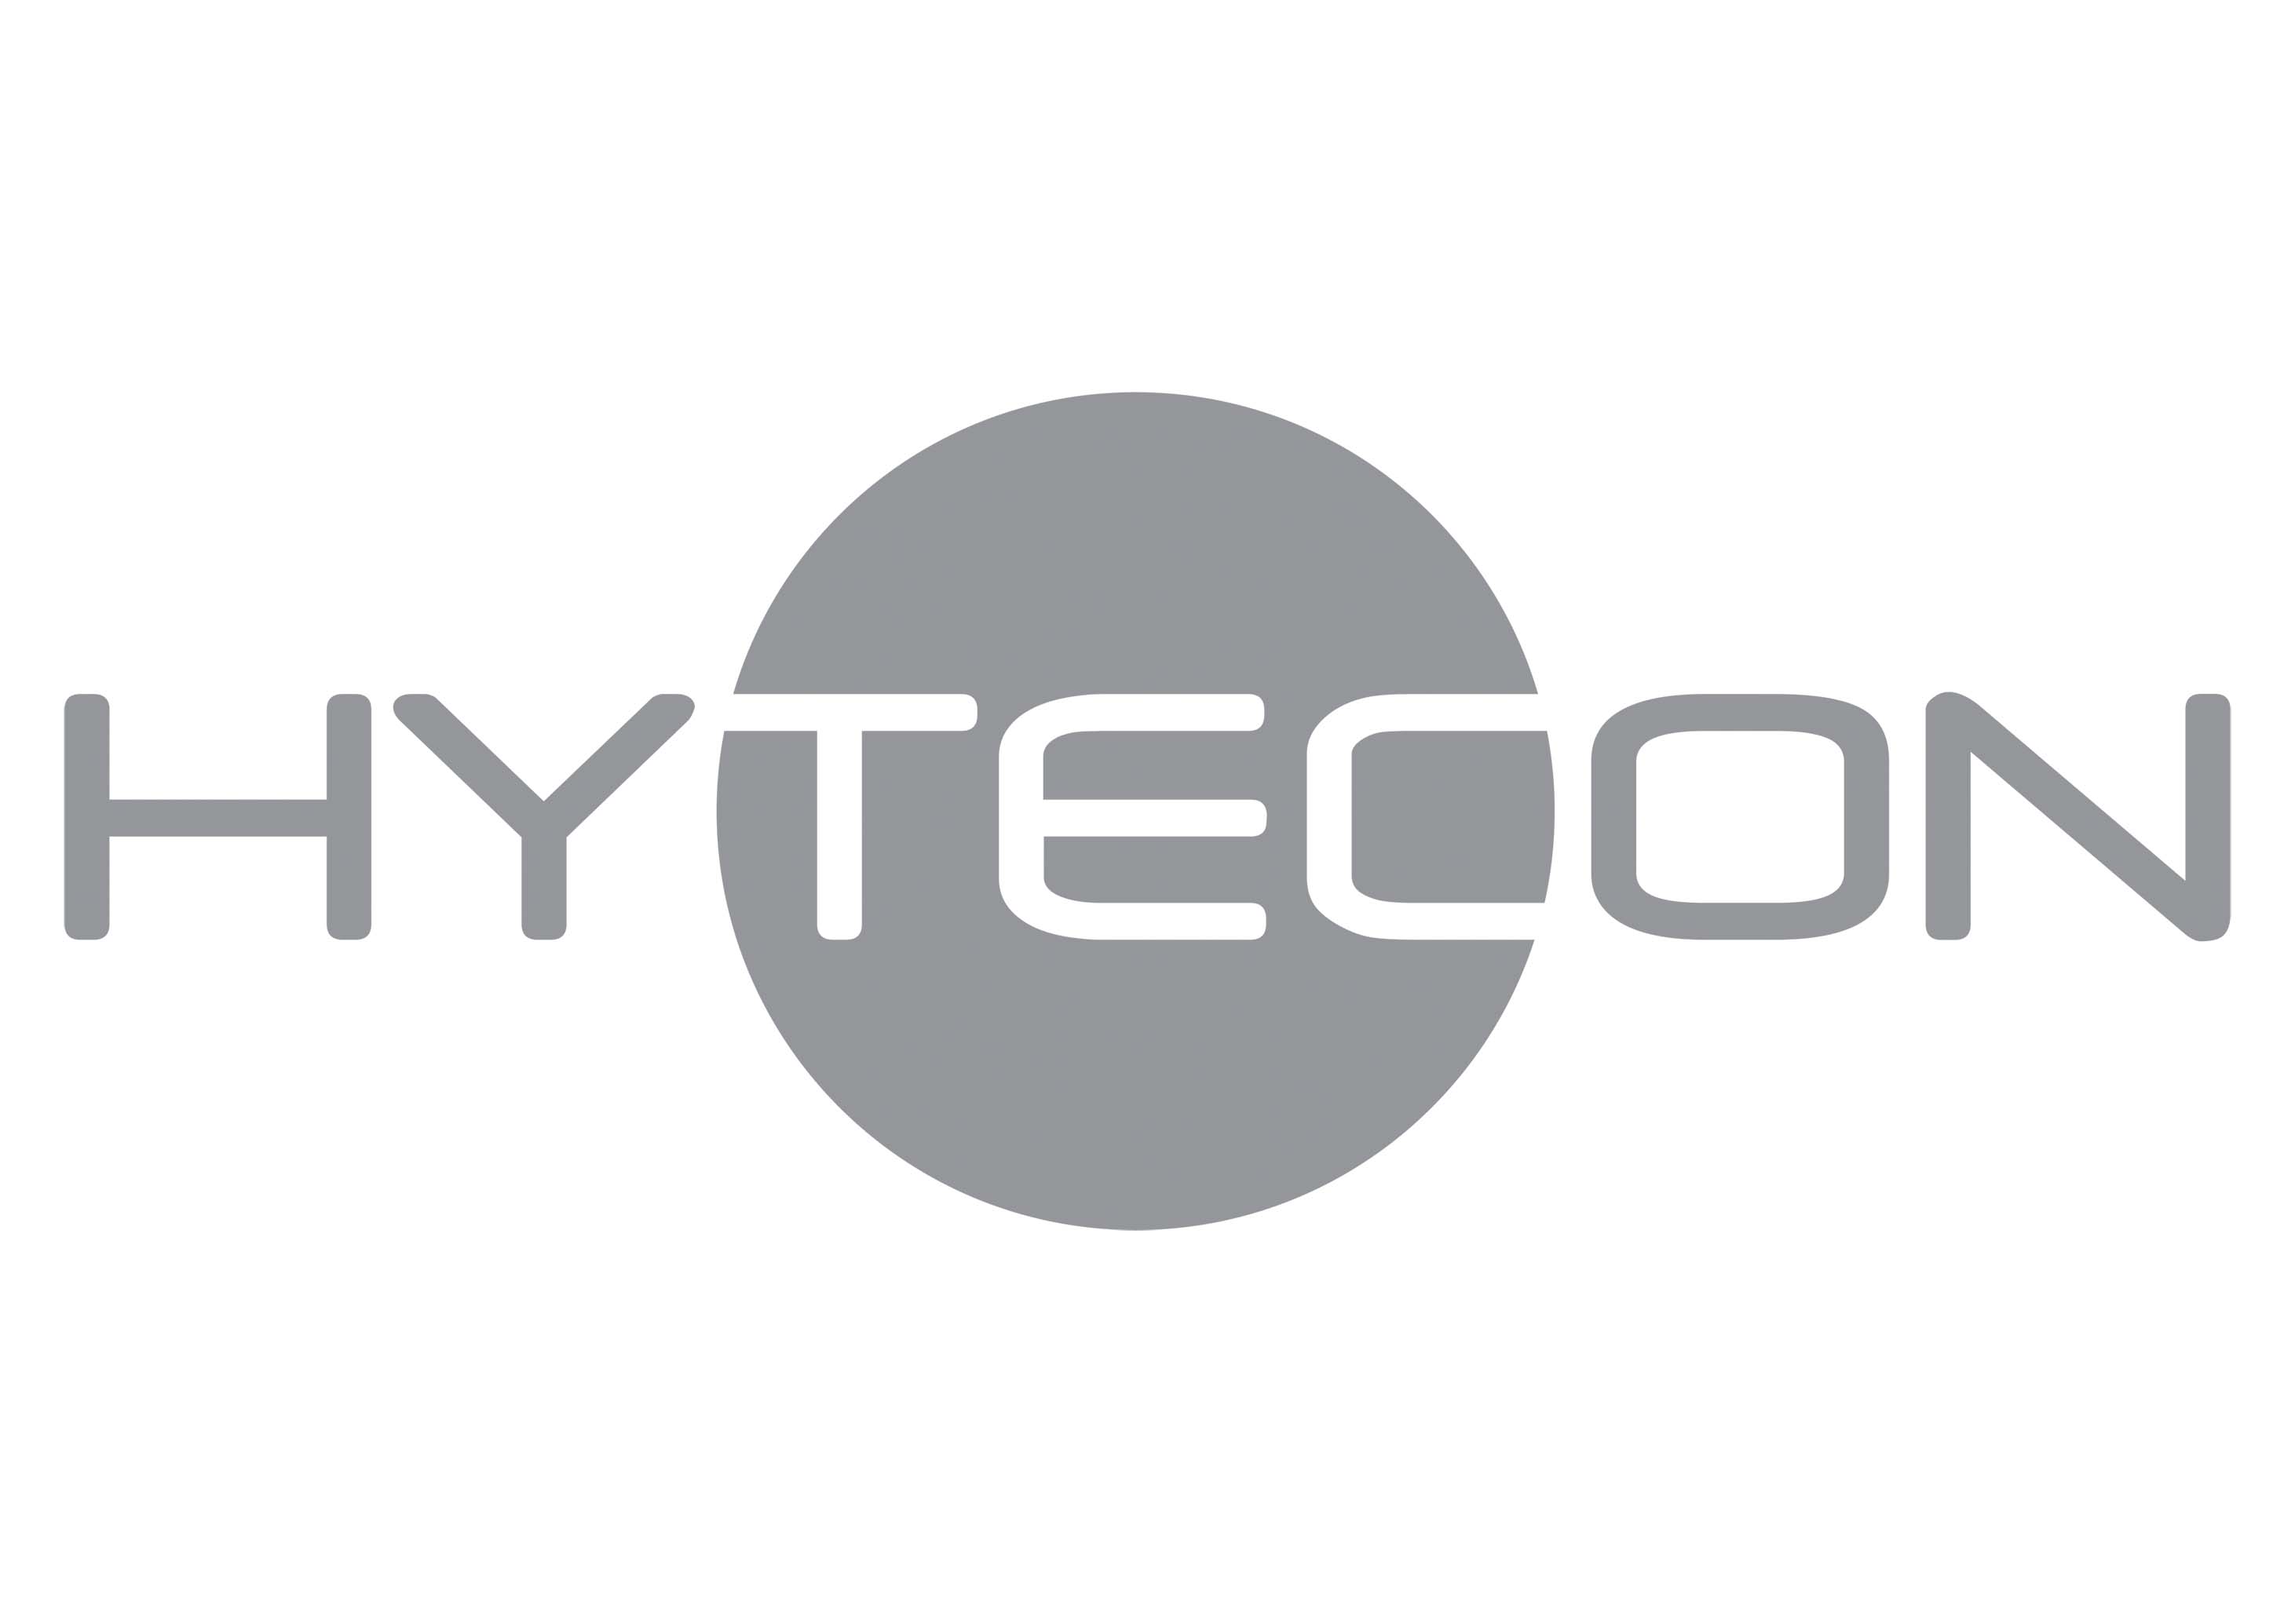 HYTECON